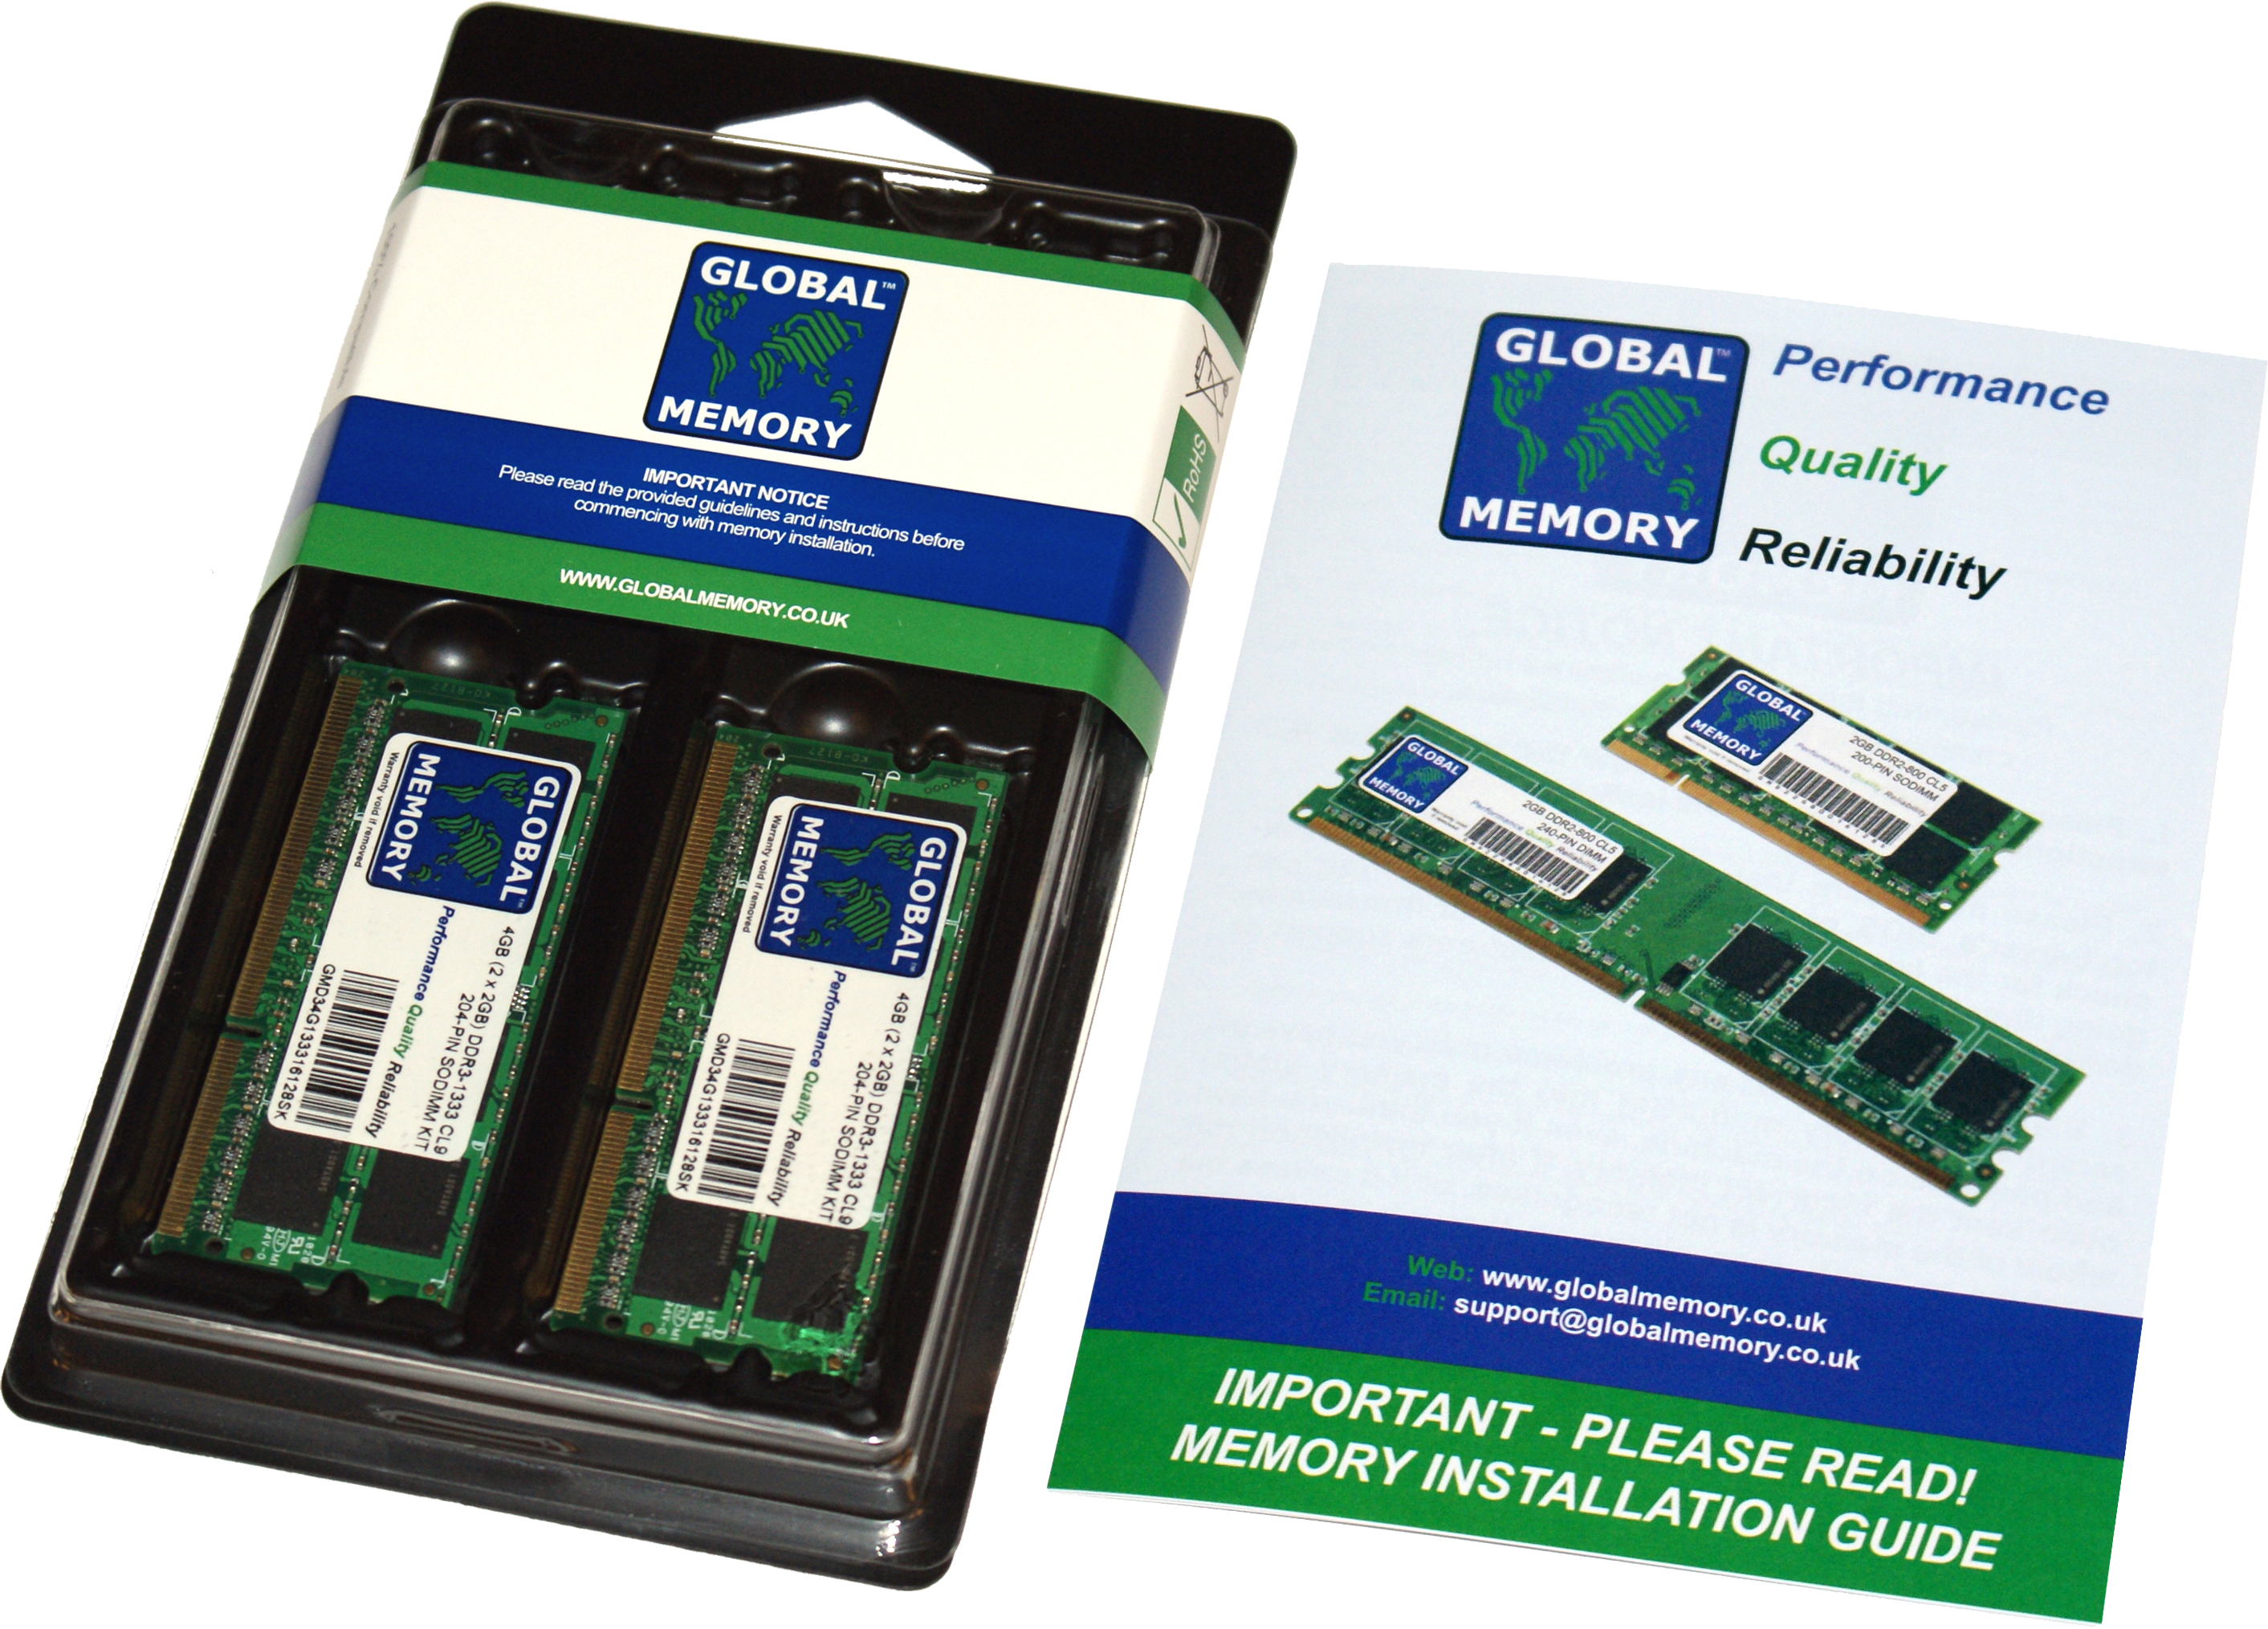 16GB (2 x 8GB) DDR3 1866MHz PC3-14900 204-PIN SODIMM MEMORY RAM KIT FOR TOSHIBA LAPTOPS/NOTEBOOKS